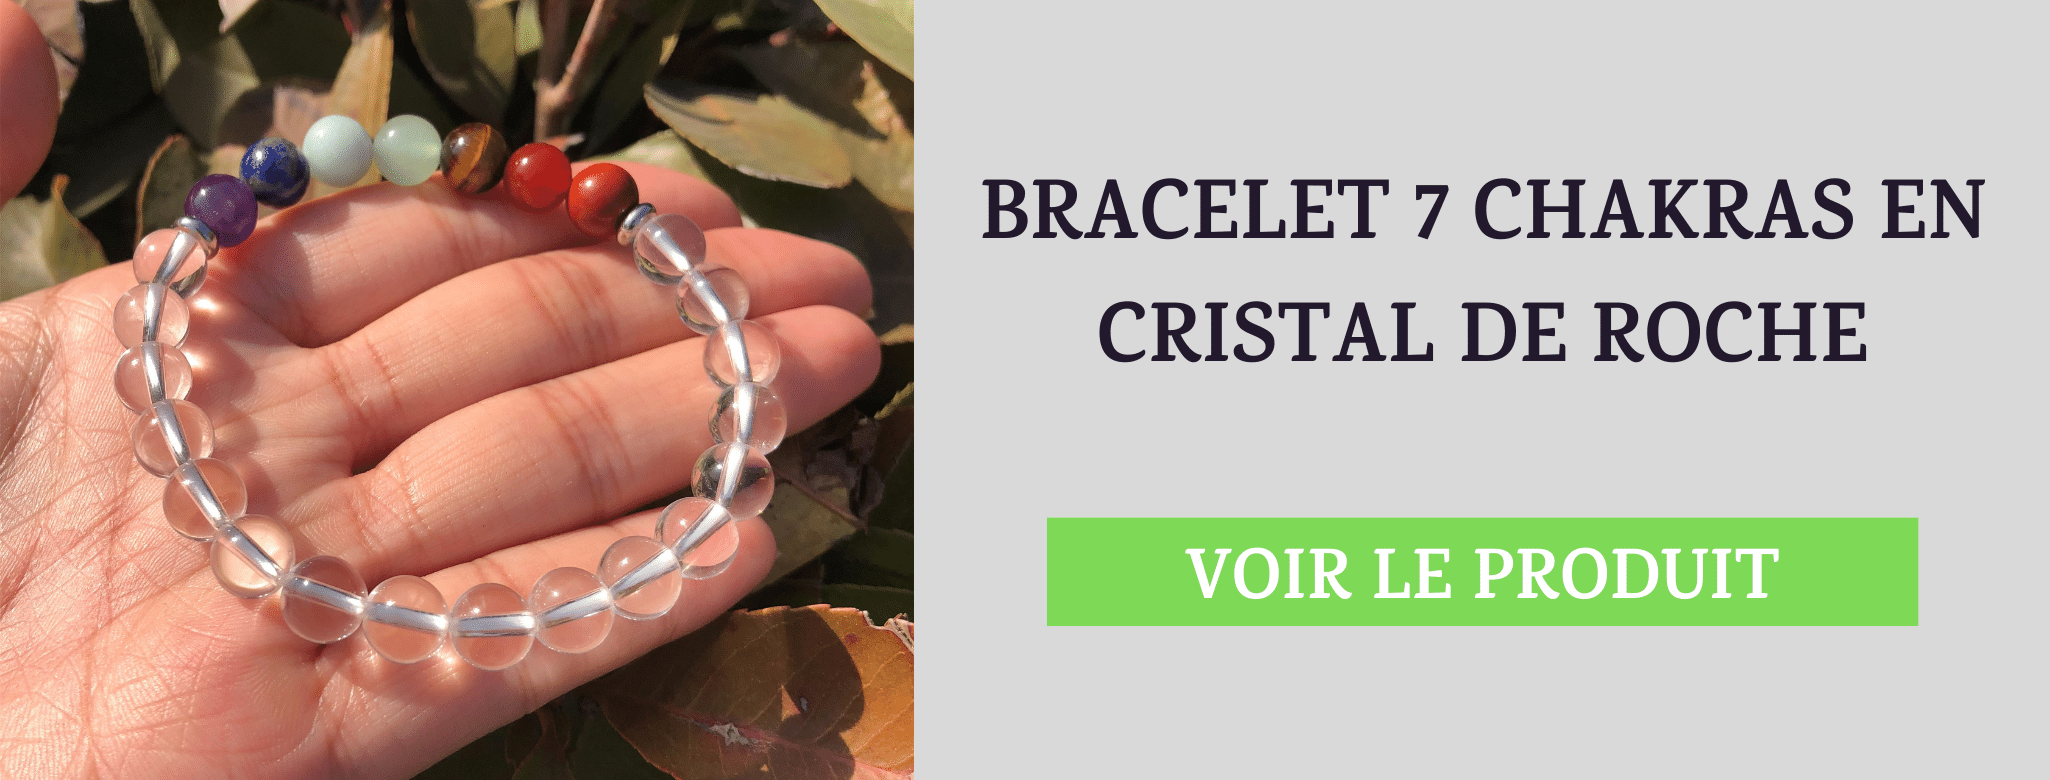 Bracelet 7 Chakras Cristal de Roche